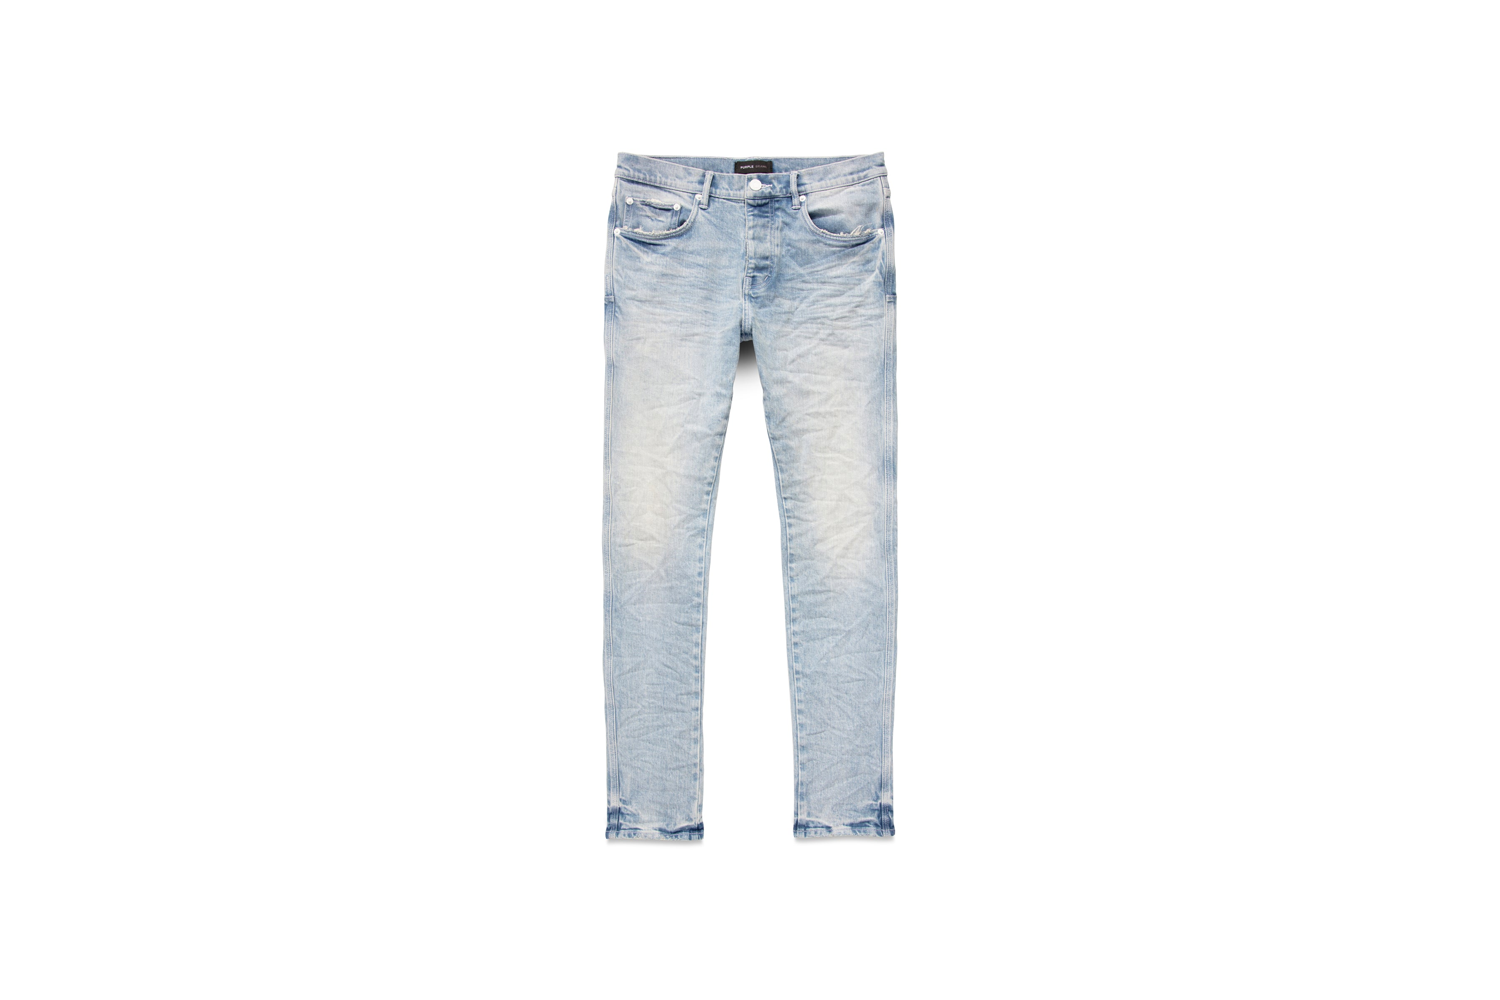 Purple Brand Jeans Style P001 Light Wash Blue Distressed Skinnys Size 30